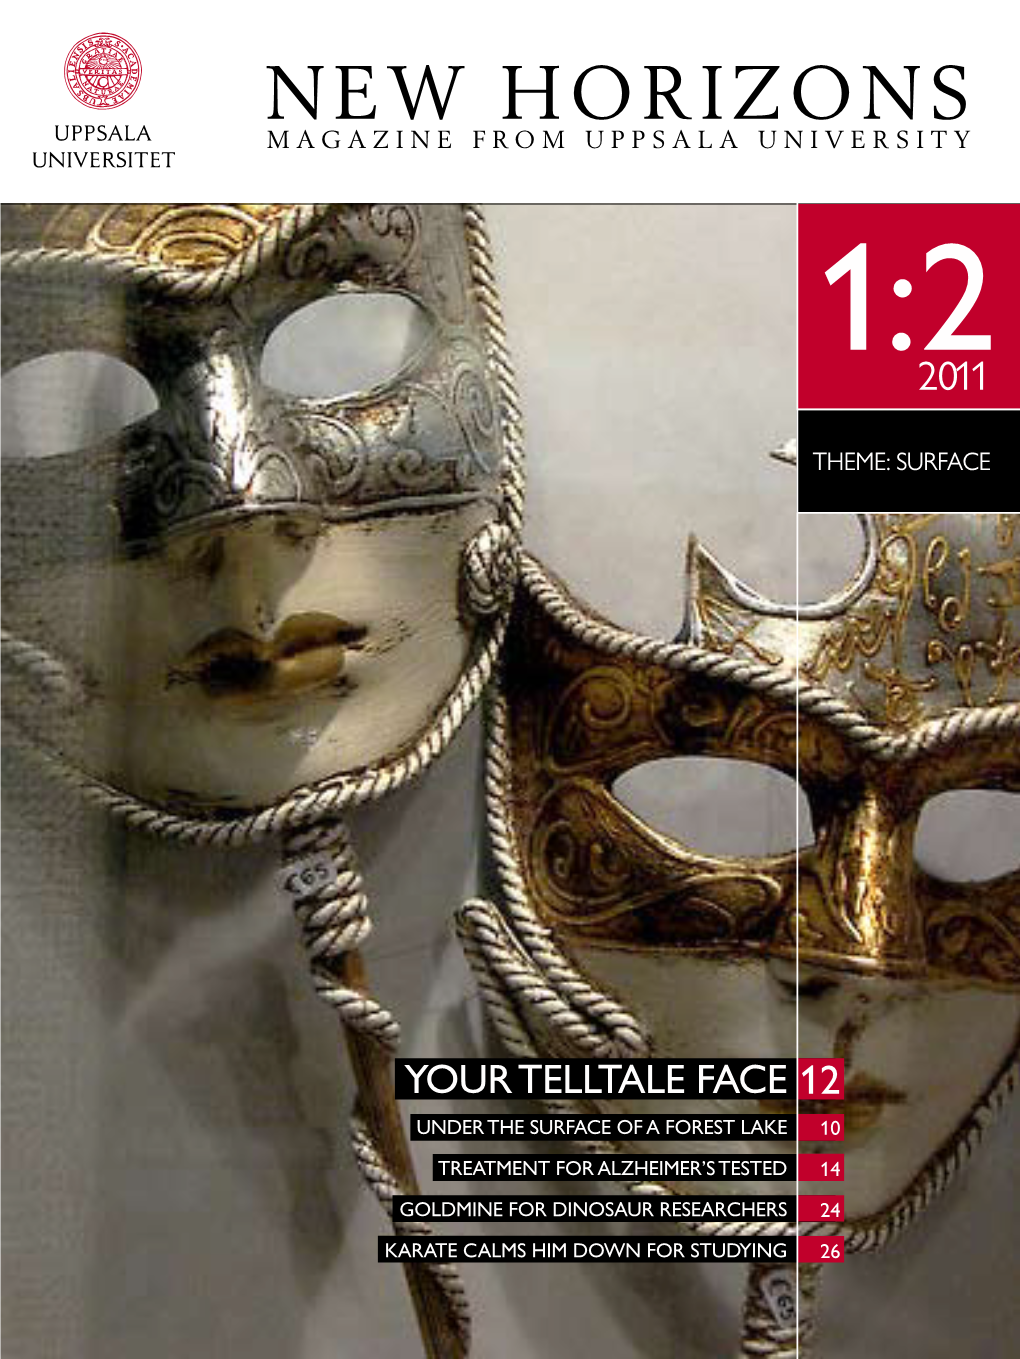 New Horizons Magazine from Uppsala University 1:2 2011